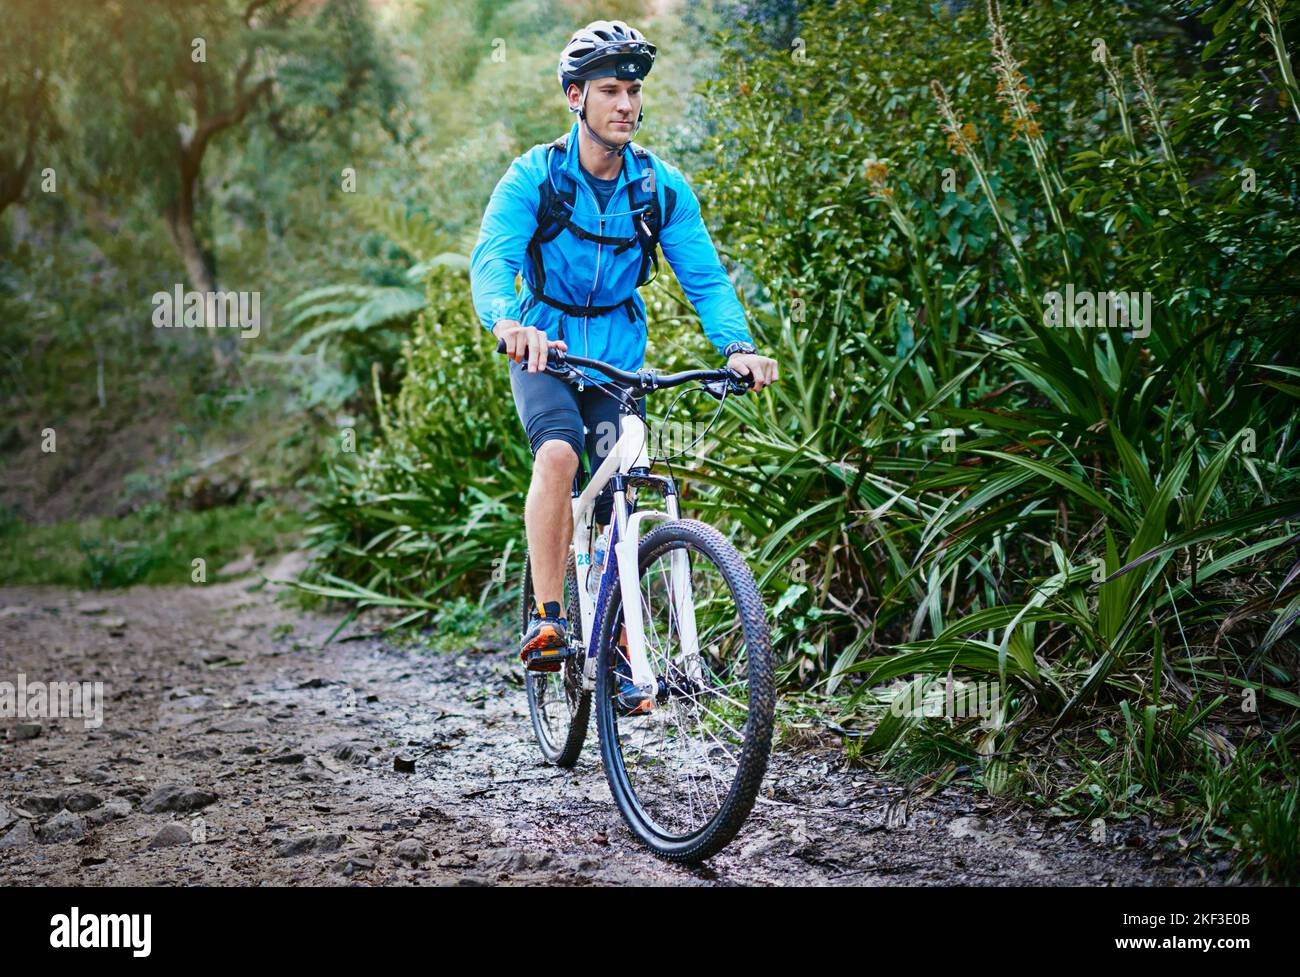 Explorar la naturaleza sobre ruedas. Un ciclista masculino a lo largo de un sendero de bicicleta de montaña. Foto de stock